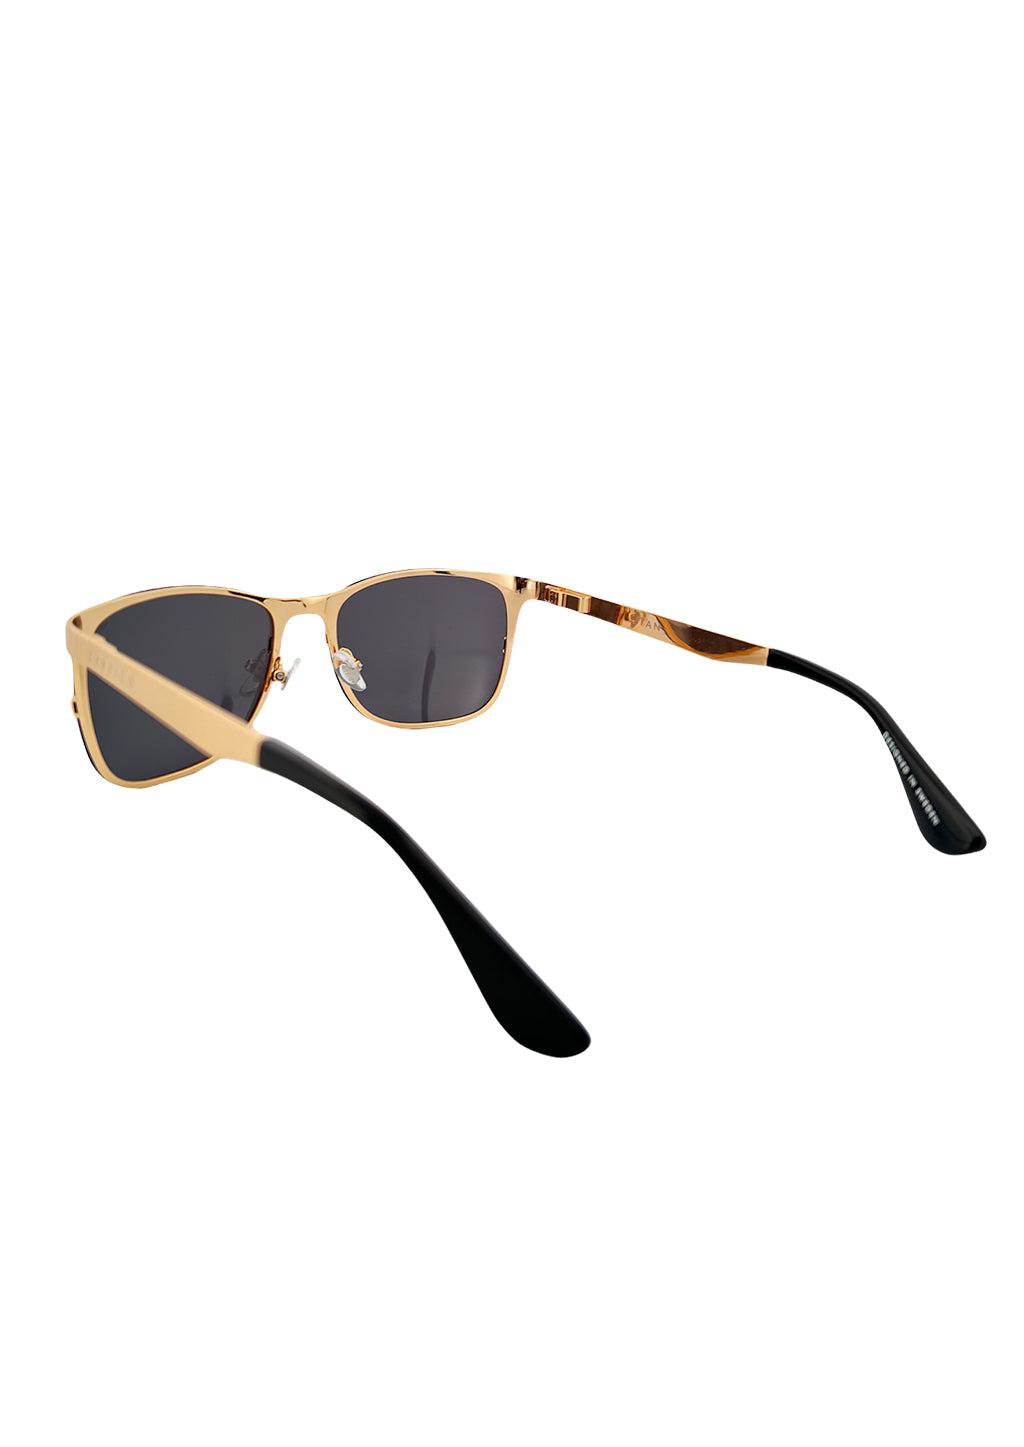 Titanium Wayfarer Sunglasses - V2 - 24K GOLD Plated-13